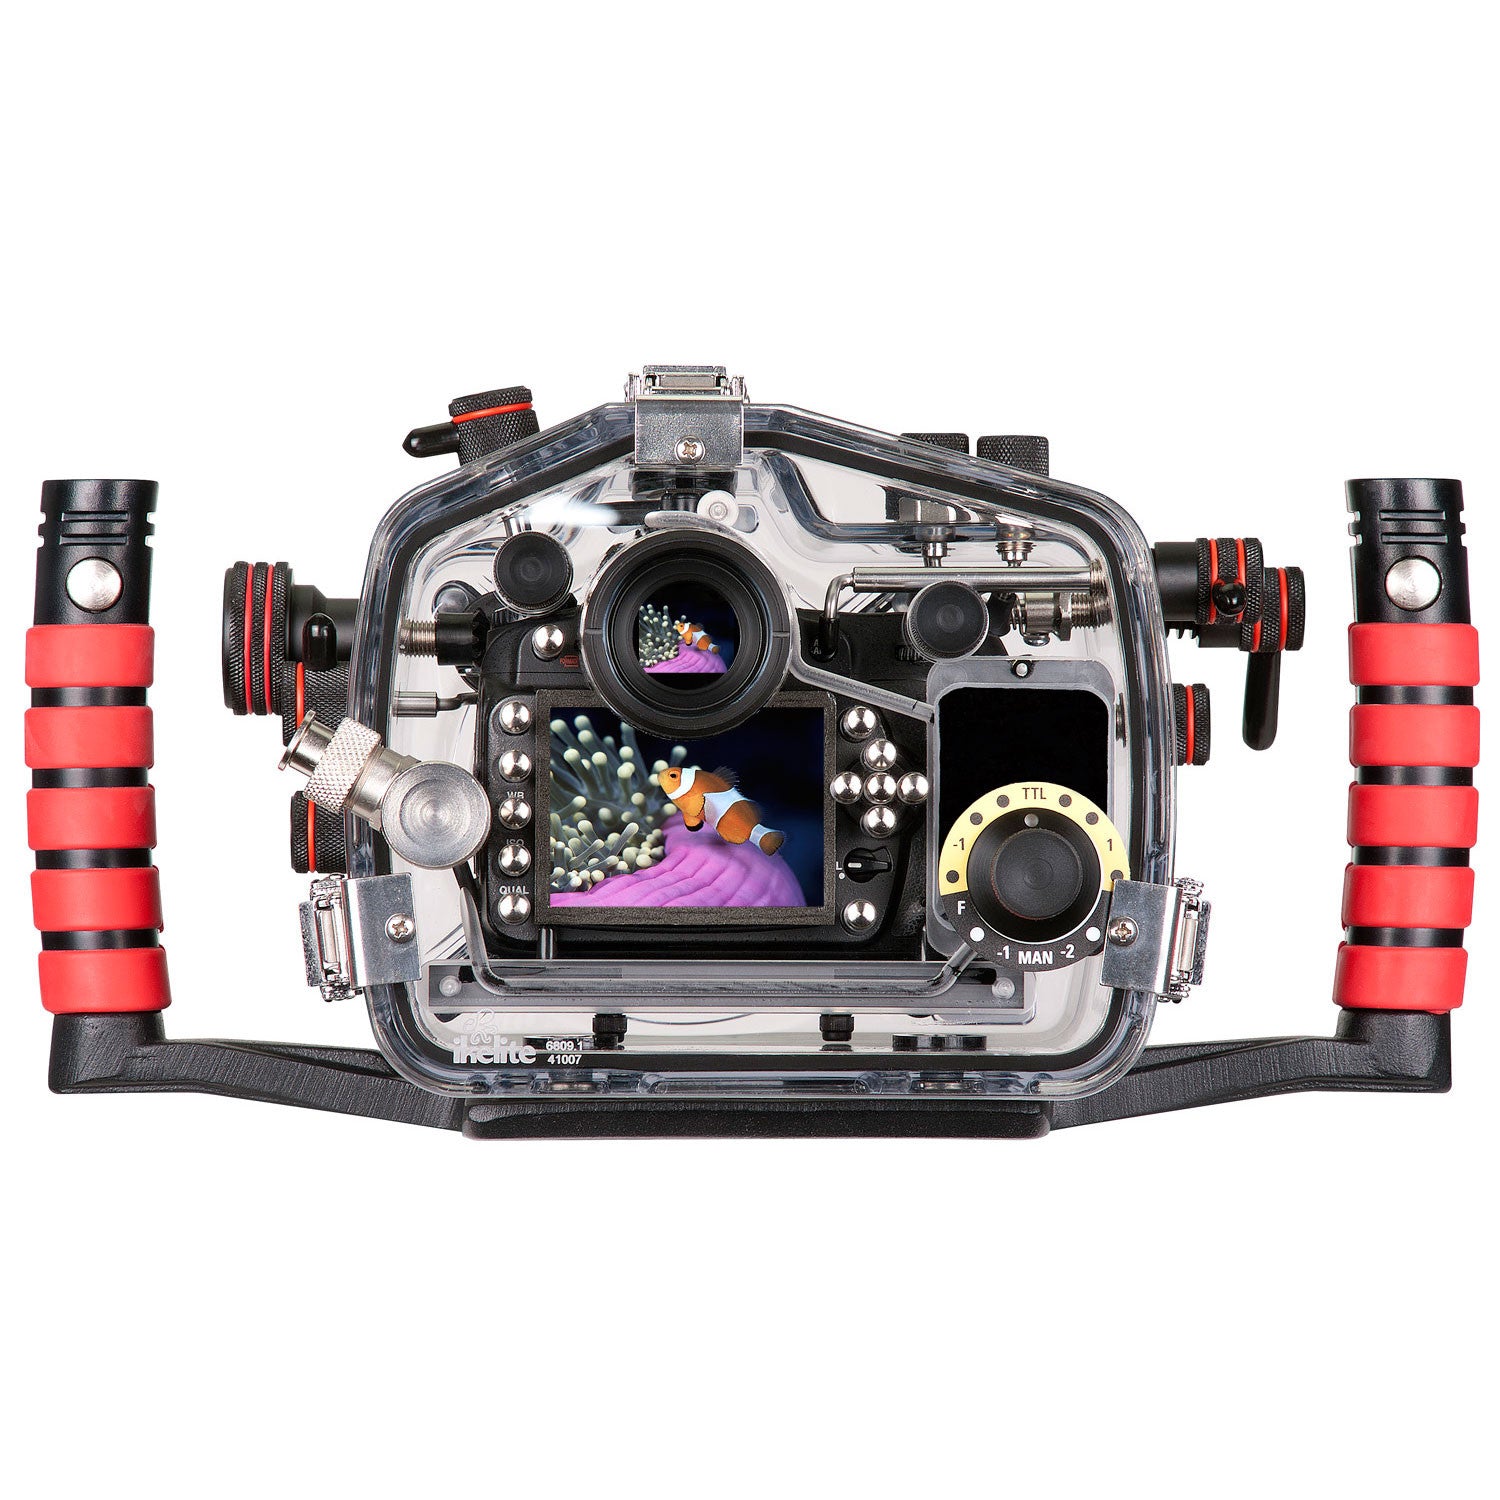 200FL Underwater TTL Housing for Nikon D90 DSLR Cameras